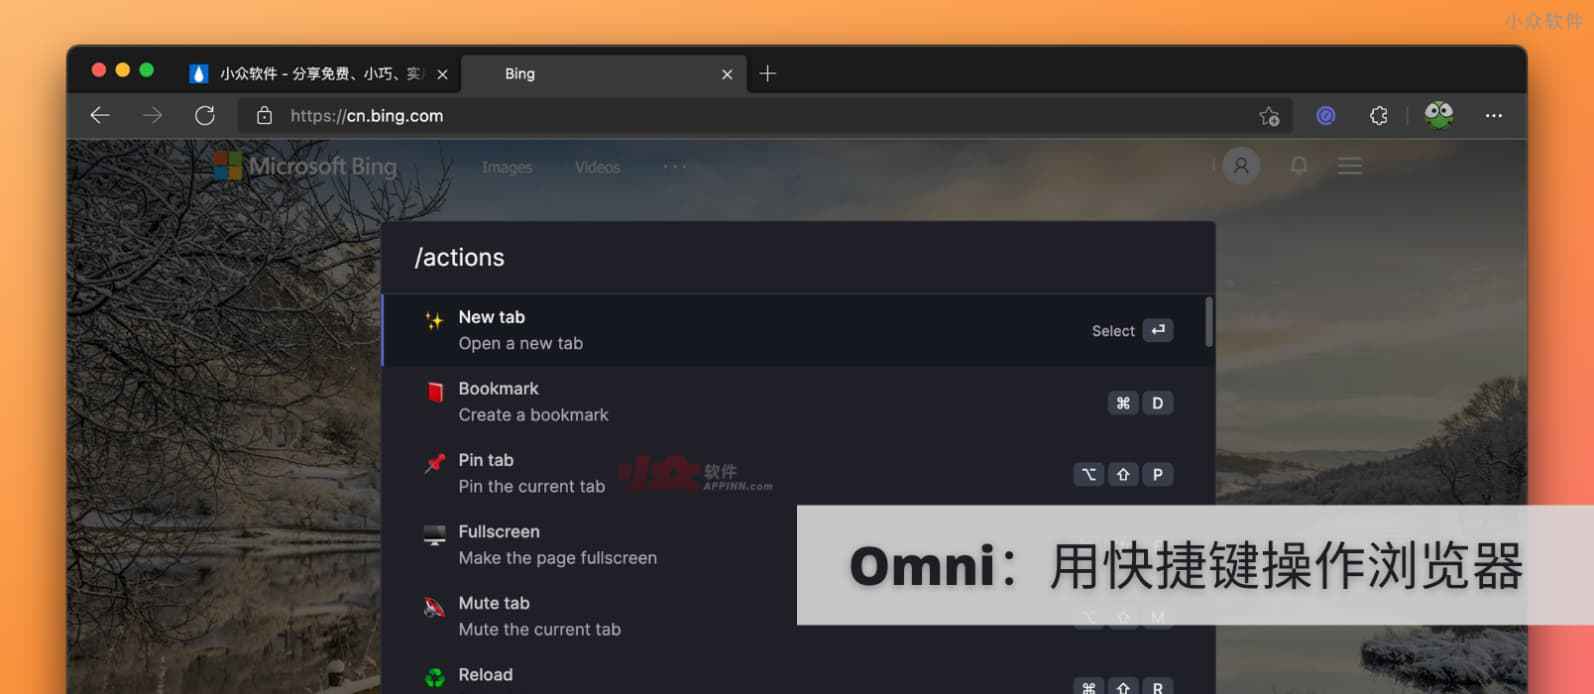 Omni - 50+ 功能，用快捷键操作浏览器：切换标签、书签、静音、录屏，整合 Notion、Figma 等服务